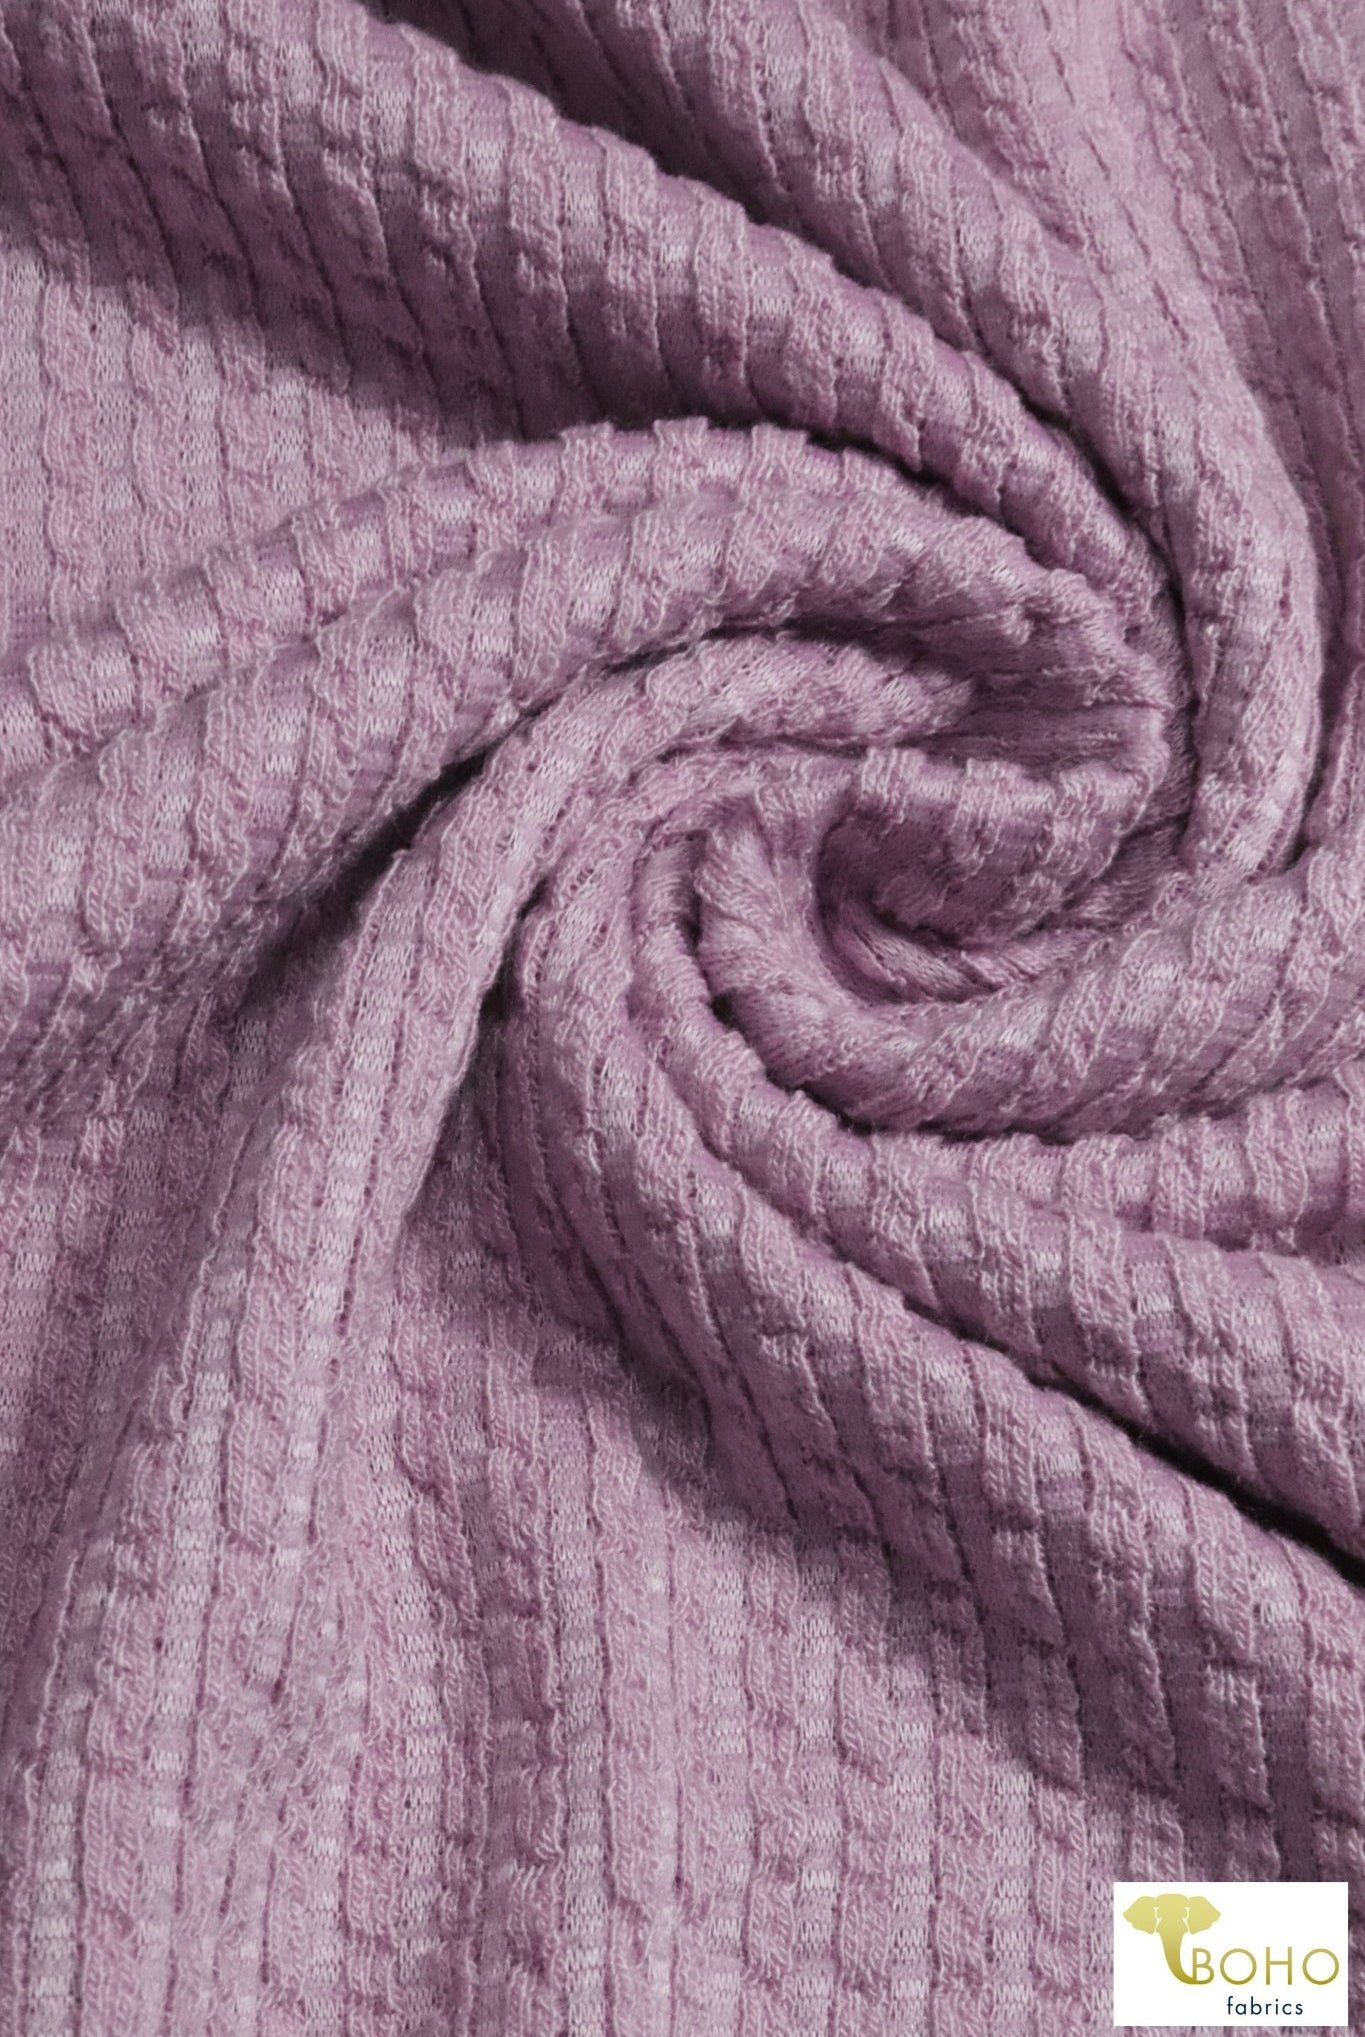 Lilac Purple Mini Cable Stripes, 5x5 Rib Knit. RIB-130-PURP - Boho Fabrics